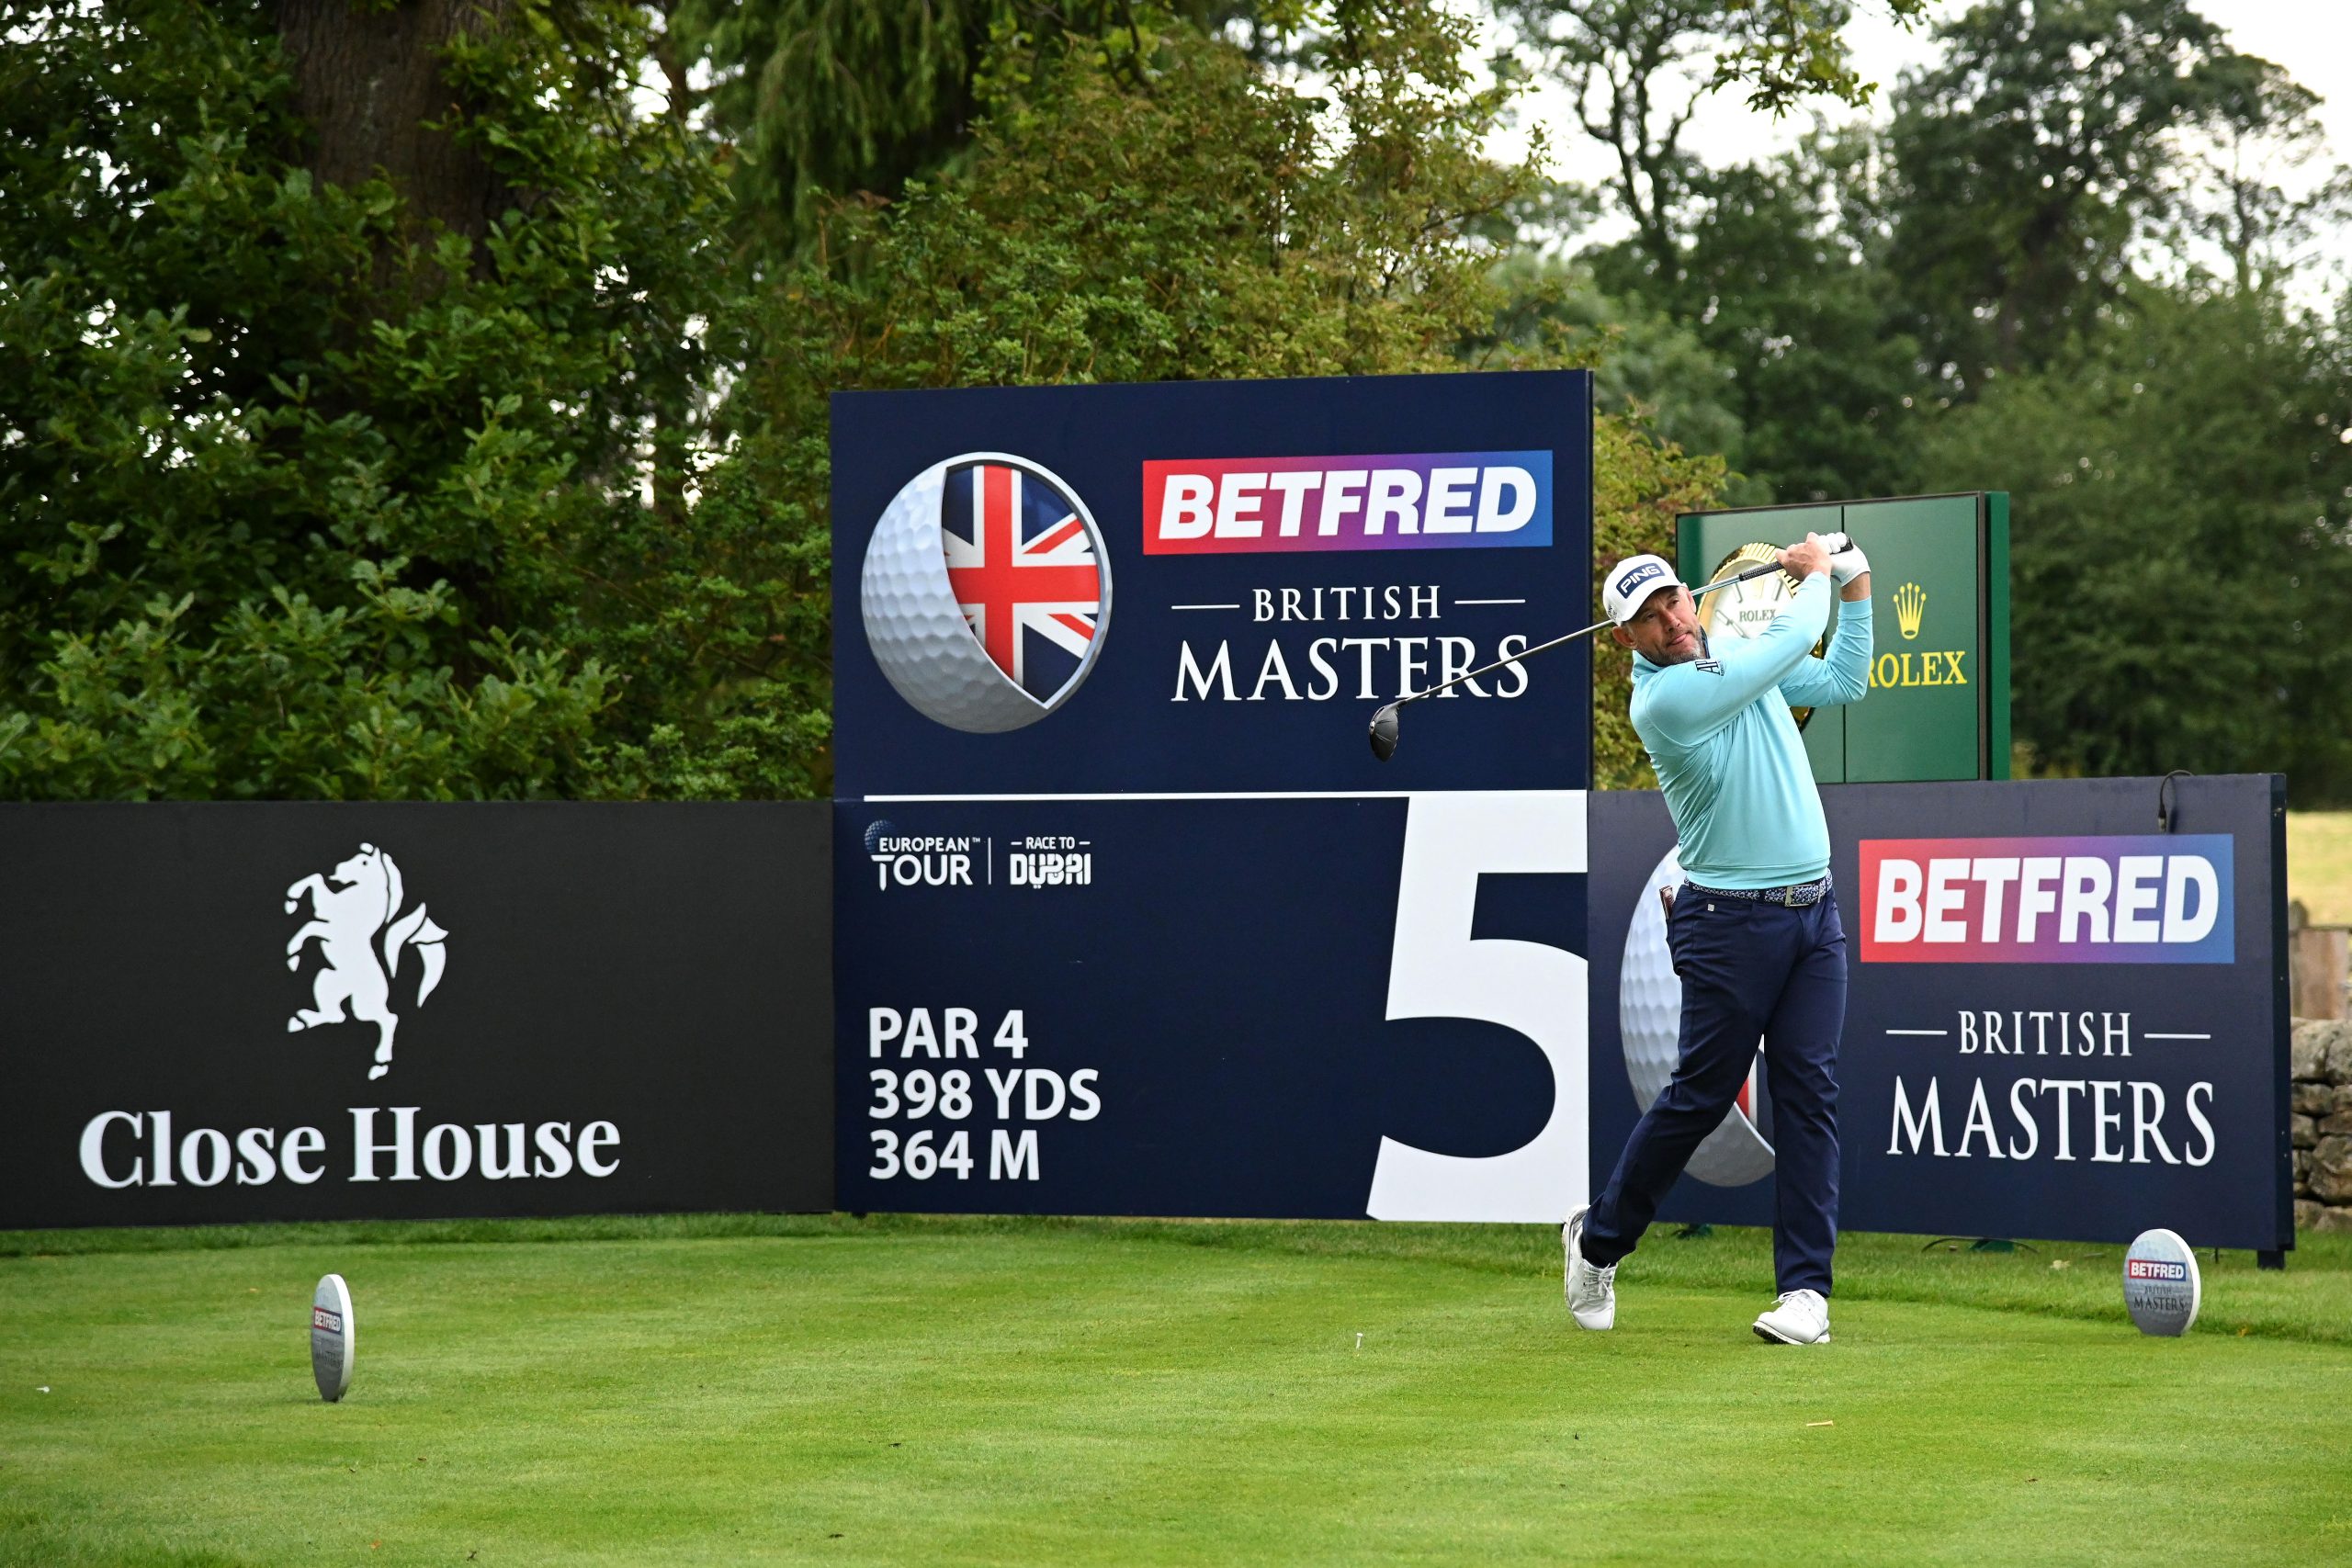 Betfred British Masters, event branding, golf